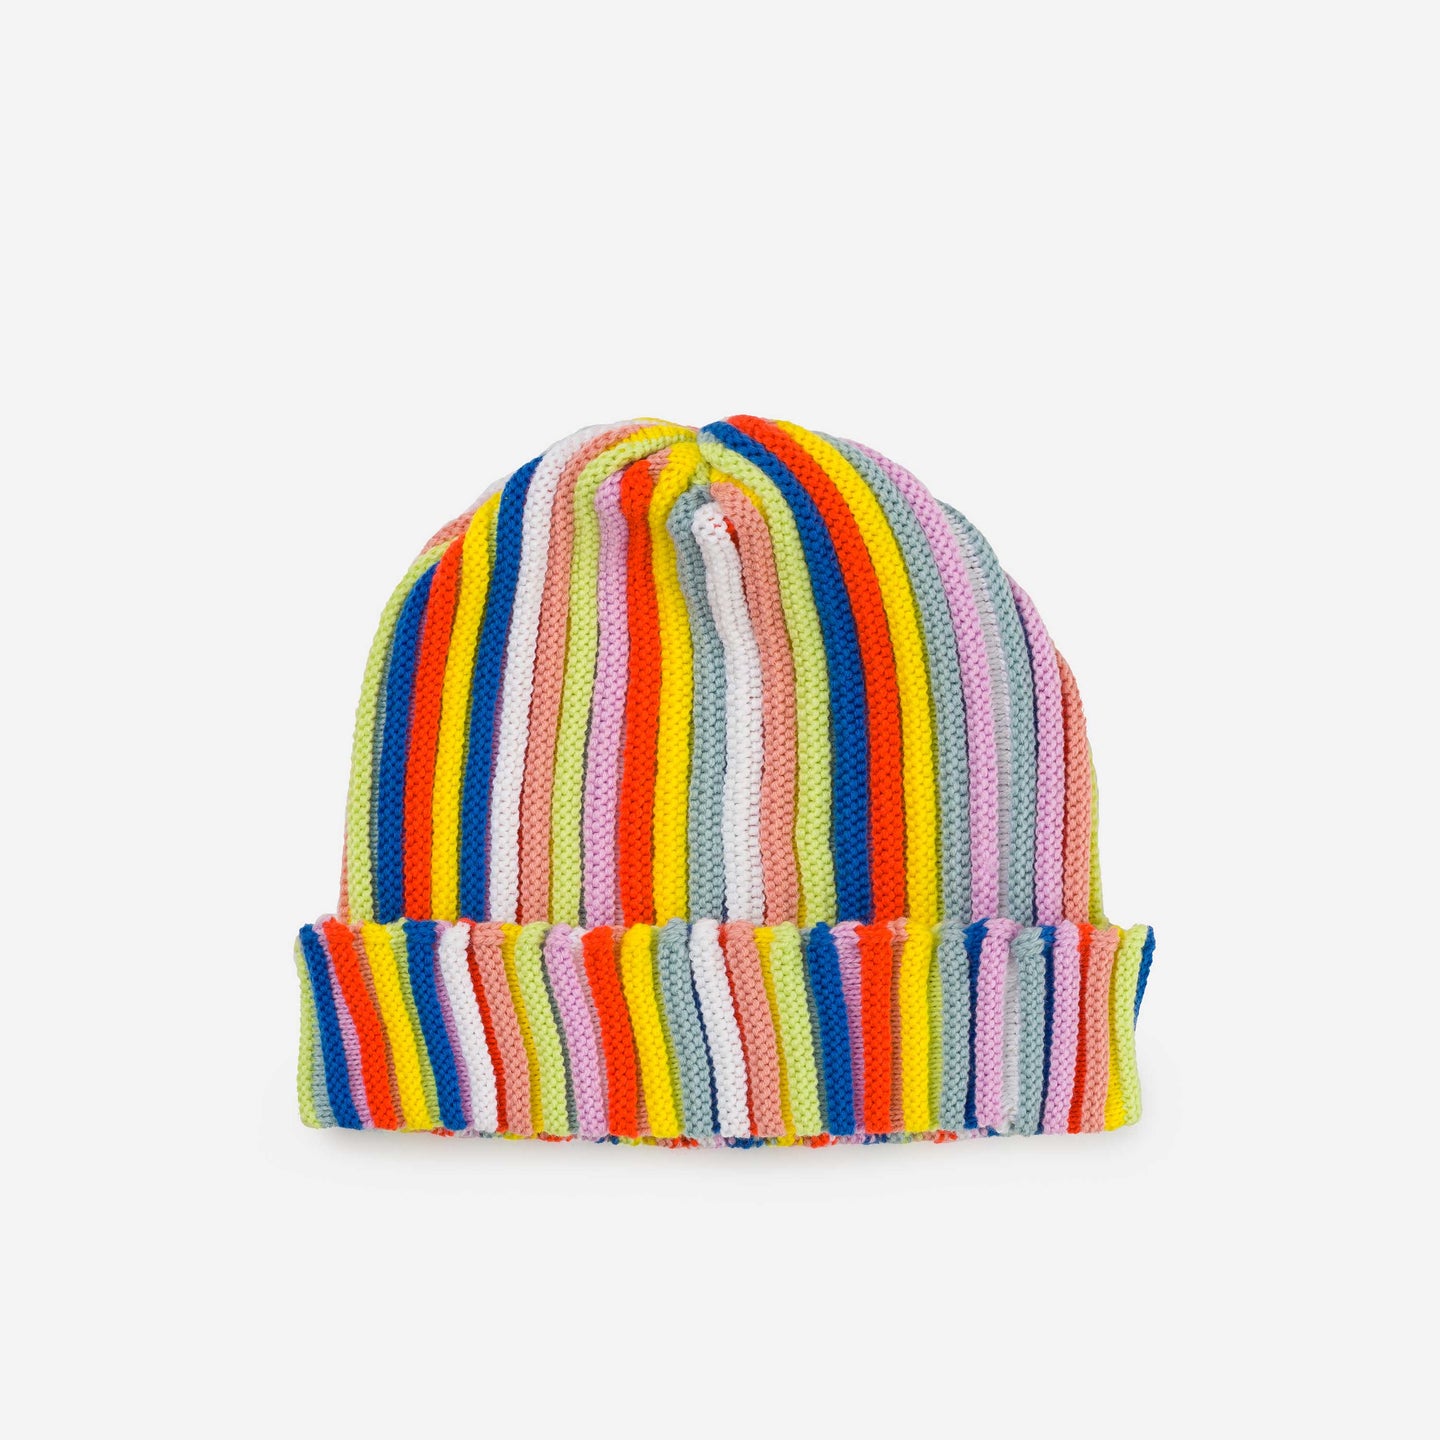 Circus Beanie Rib Knit Stretch Hat textured fun colorful hat